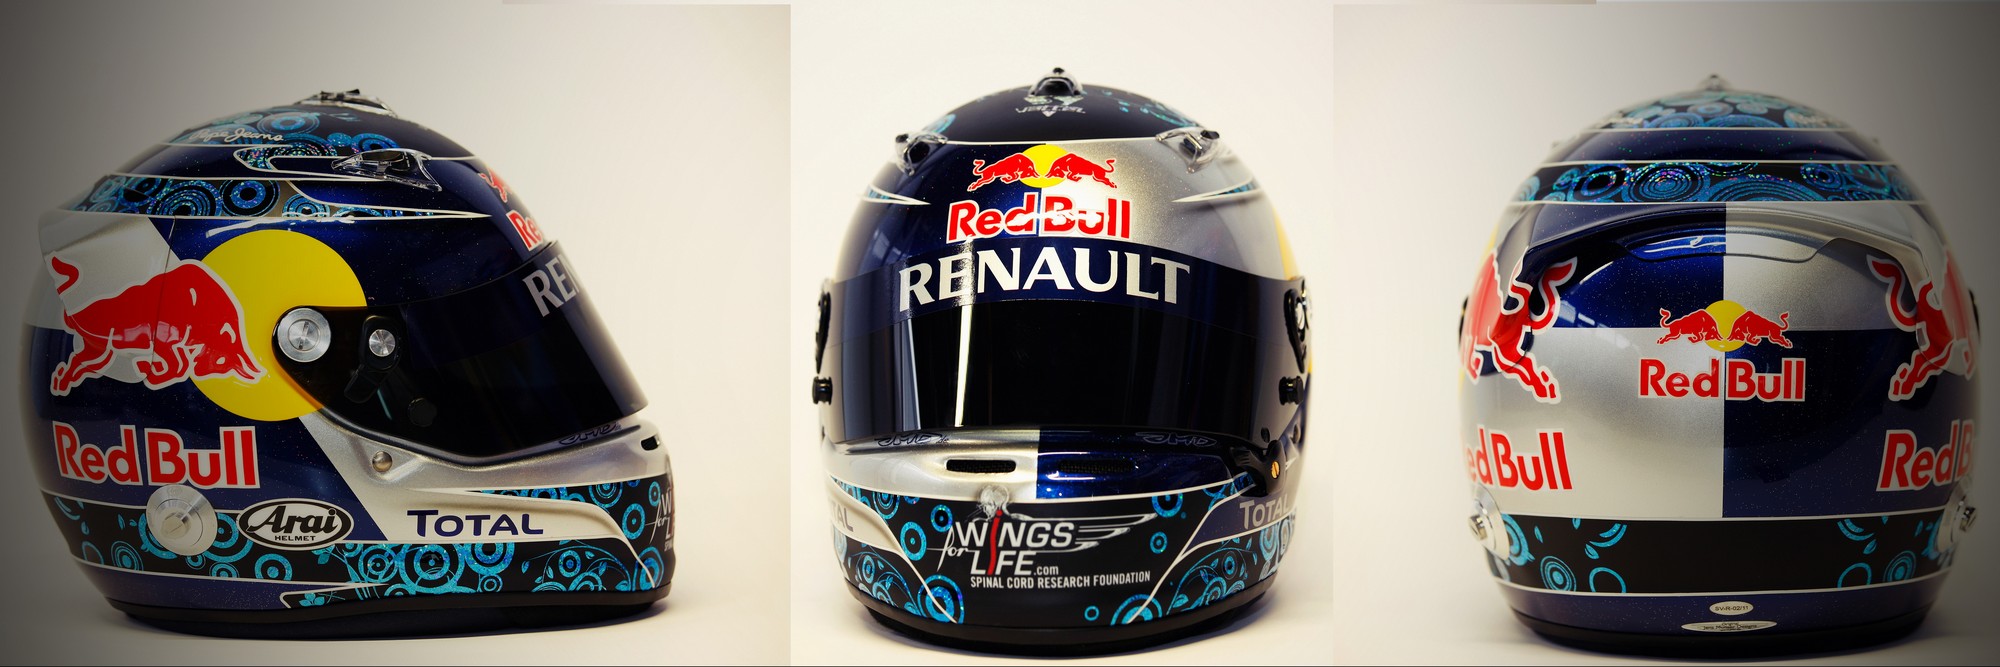 Шлем Себастьяна Феттеля на сезон 2011 года | 2011 helmet of Sebastian Vettel